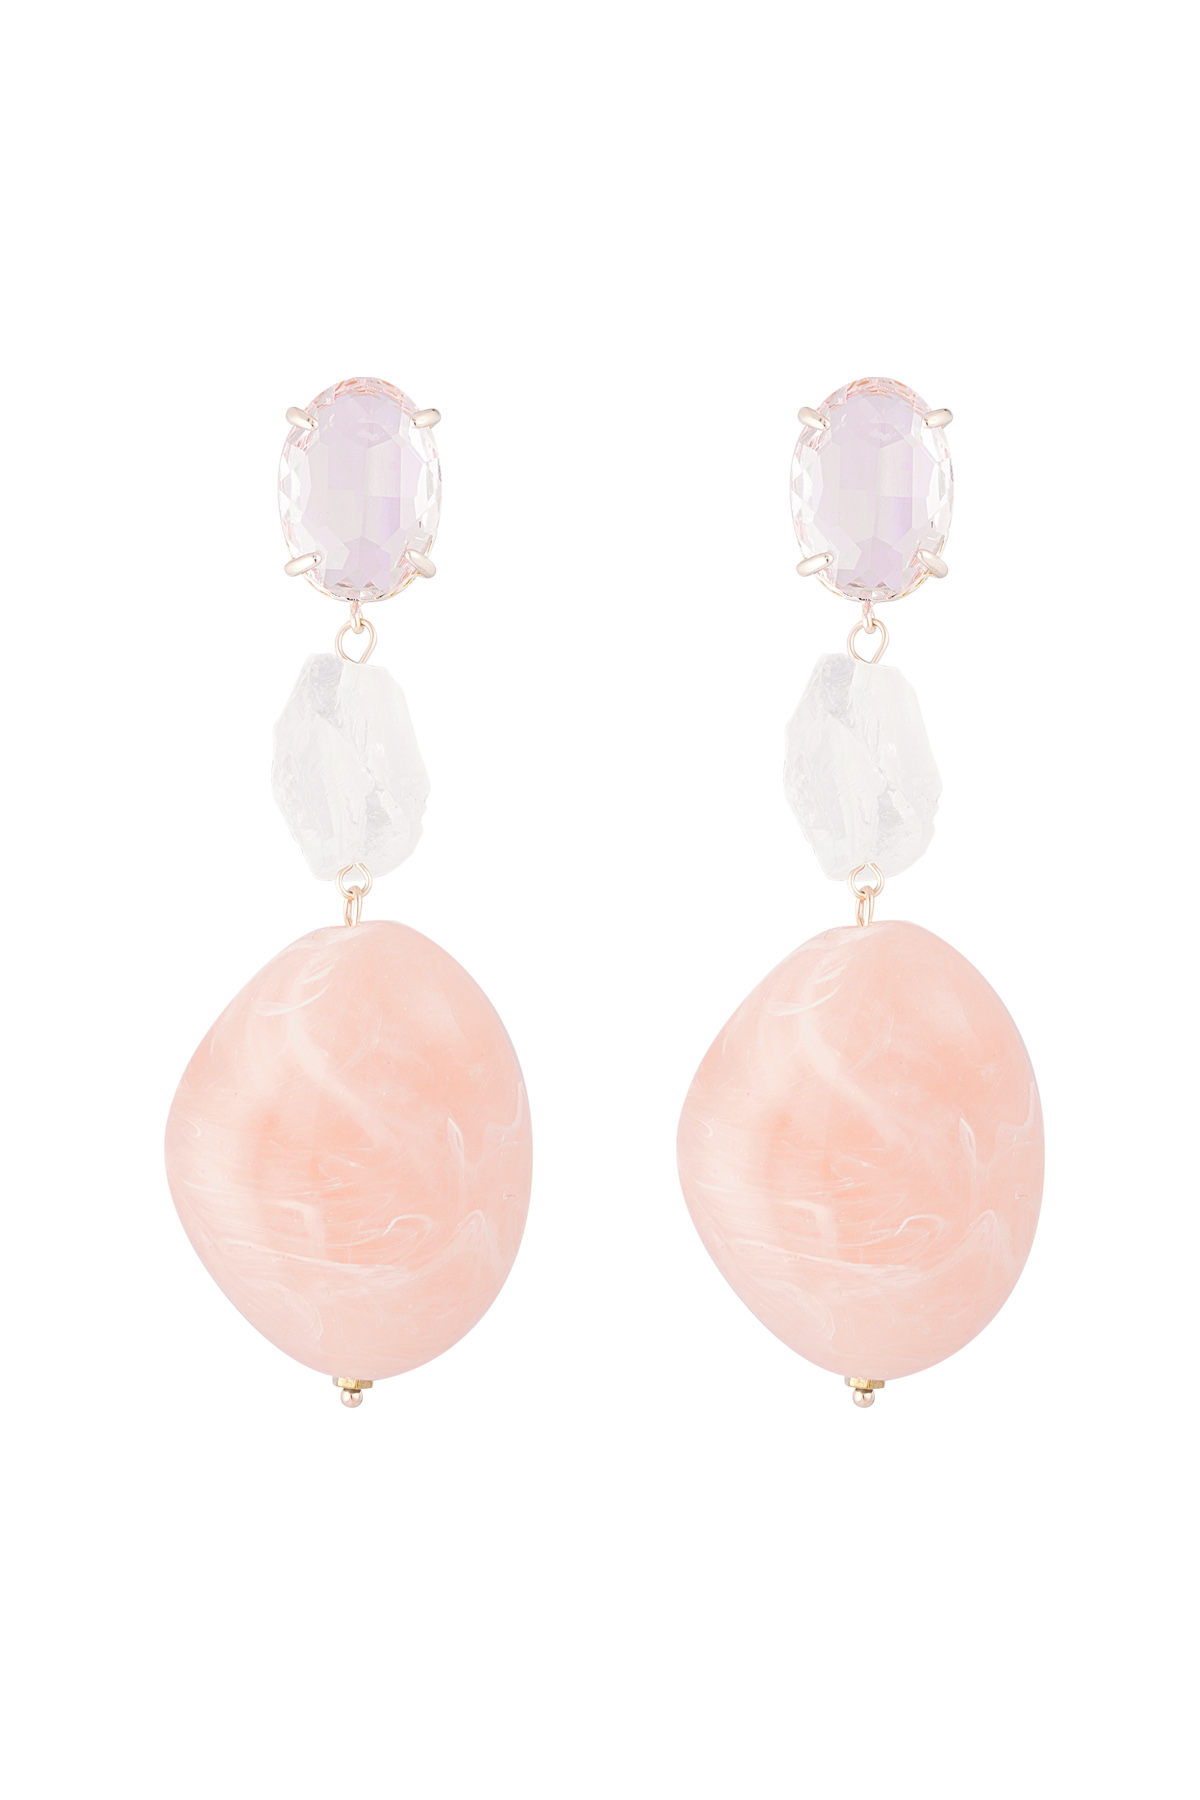 Statement glass earrings - pink 